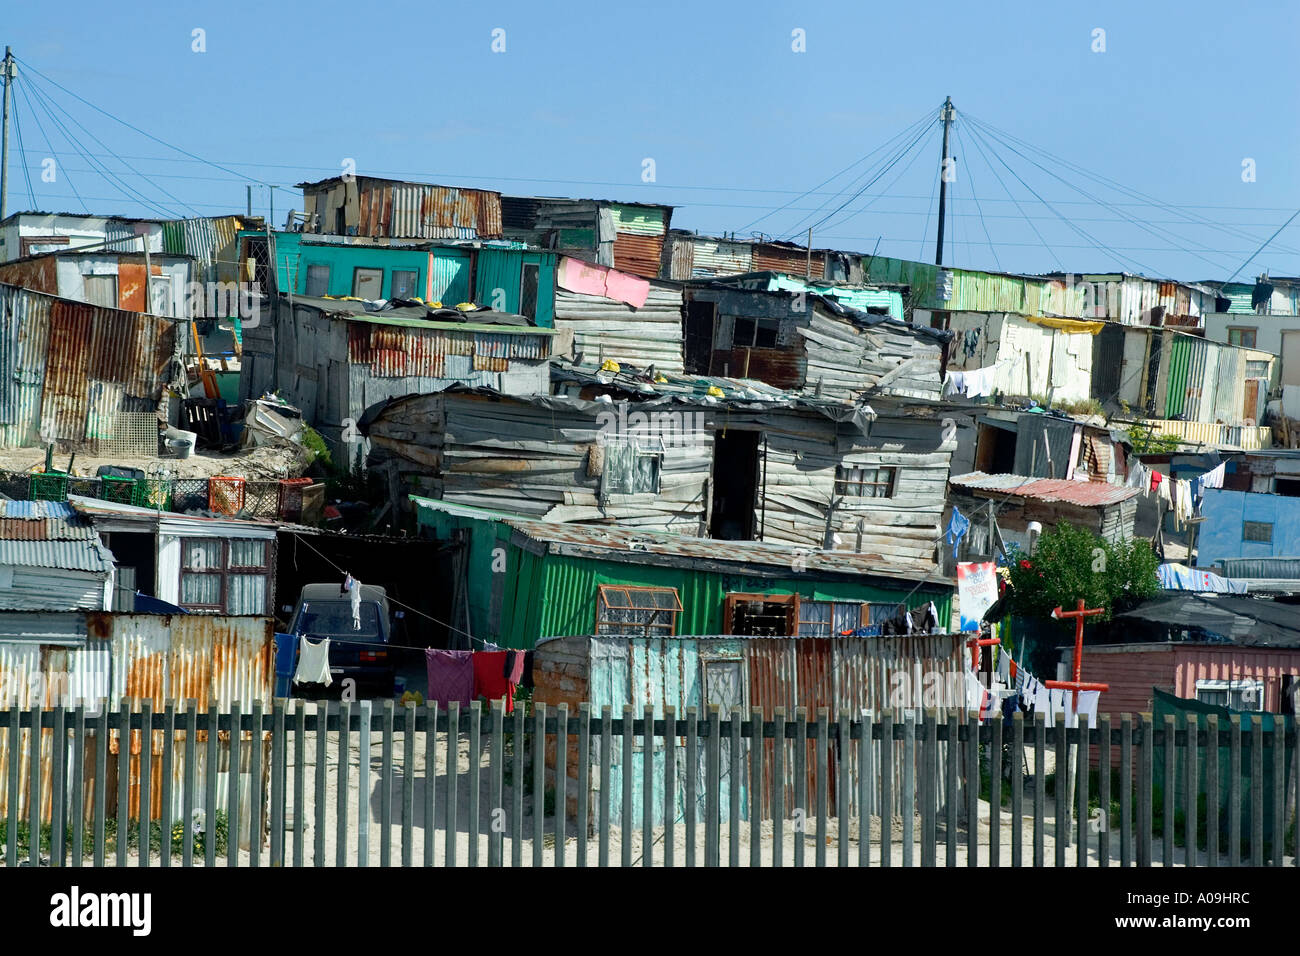 tin city South Africa Stock Photo